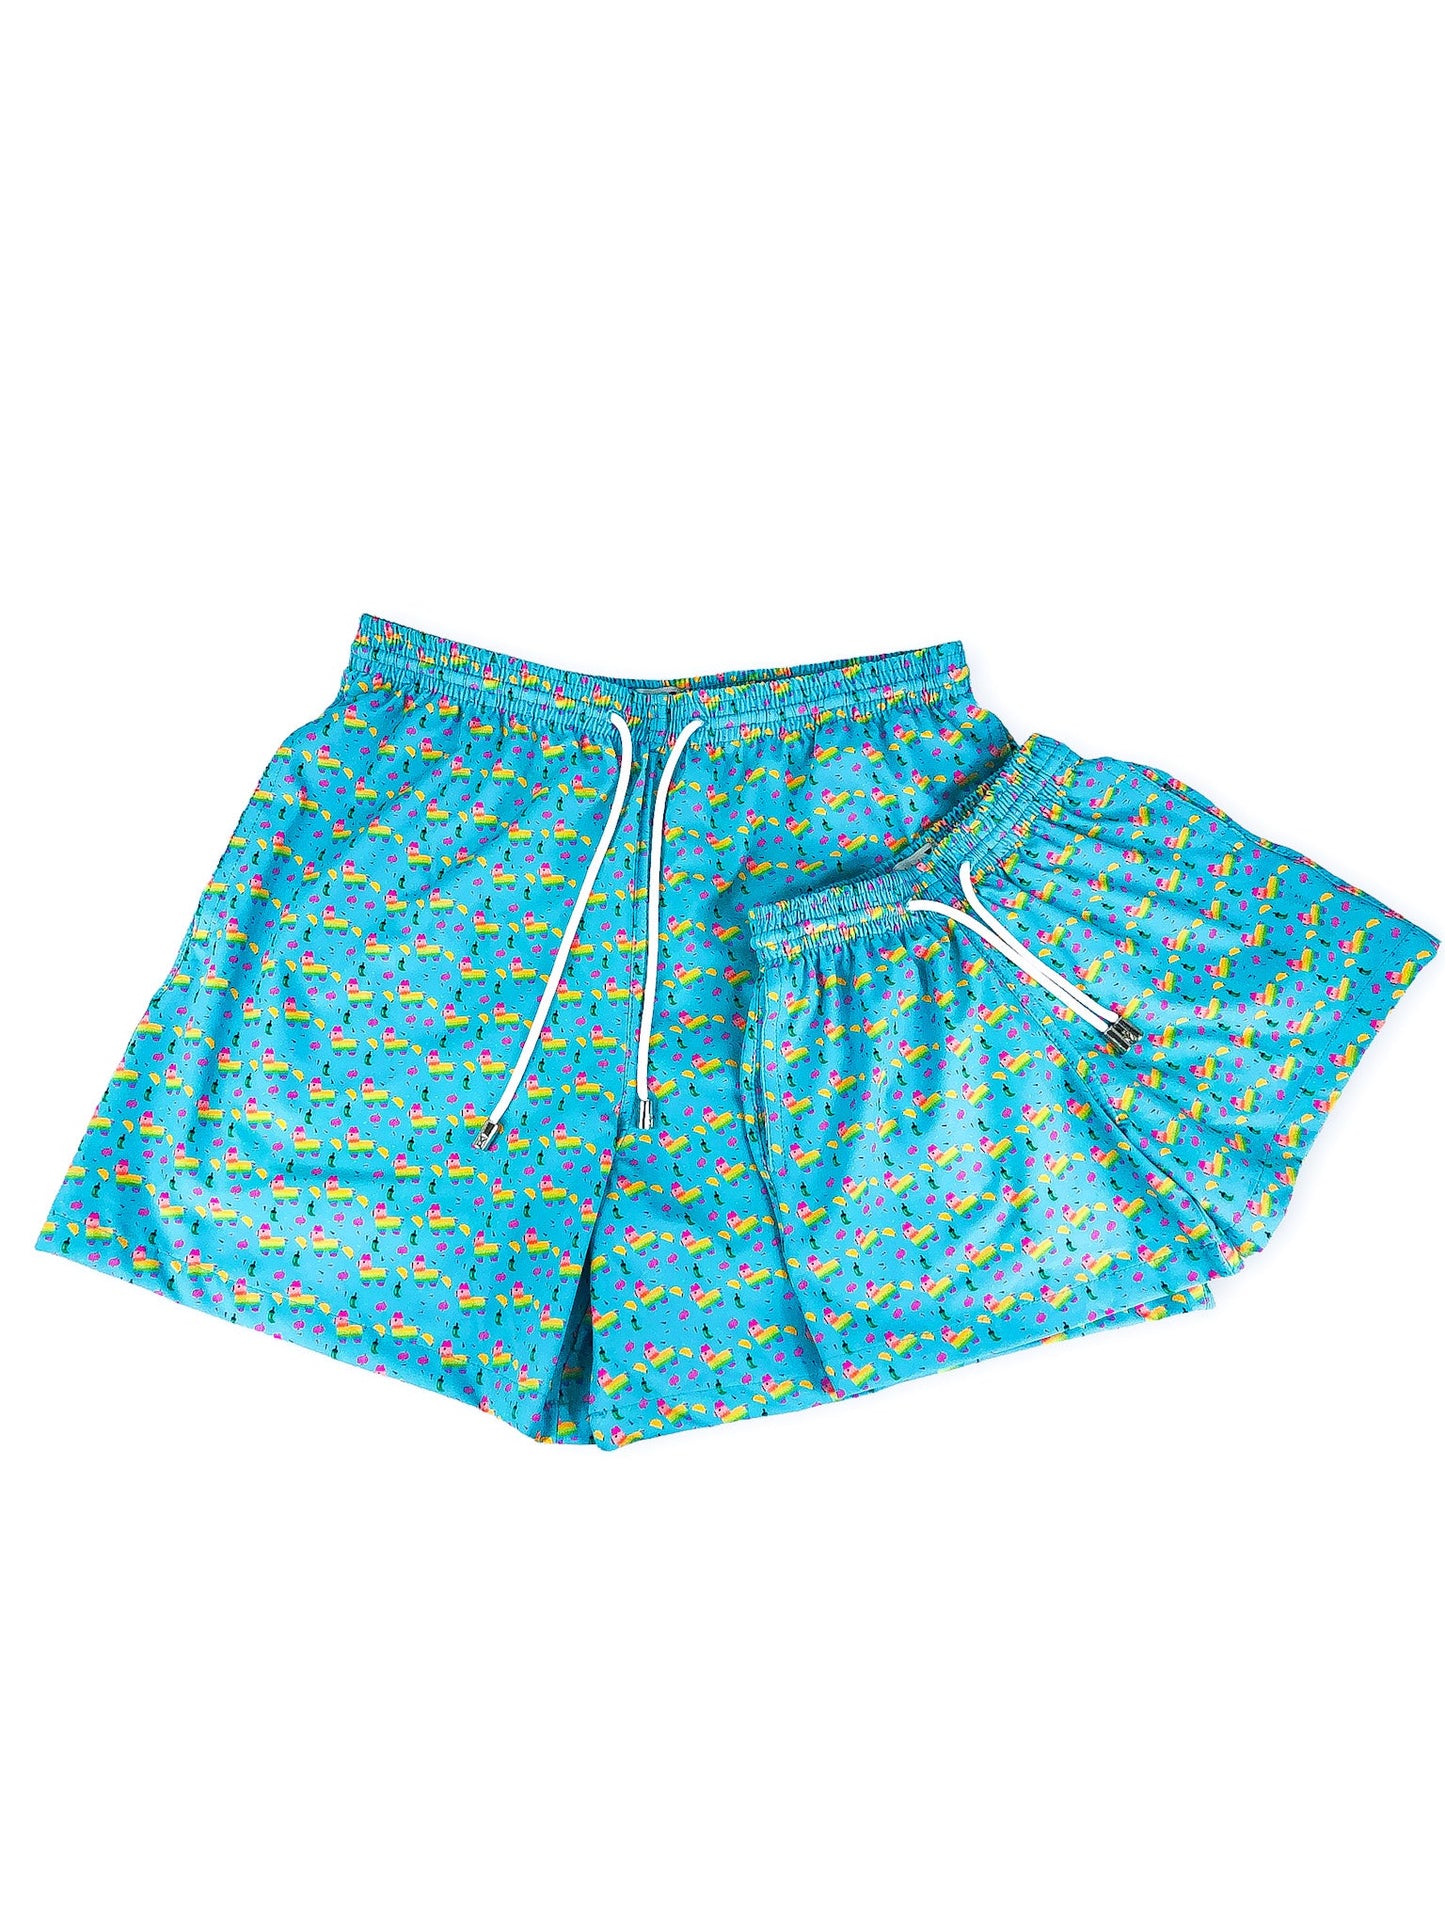 Swim Trunks | Piñata Collection | Men's Swimwear